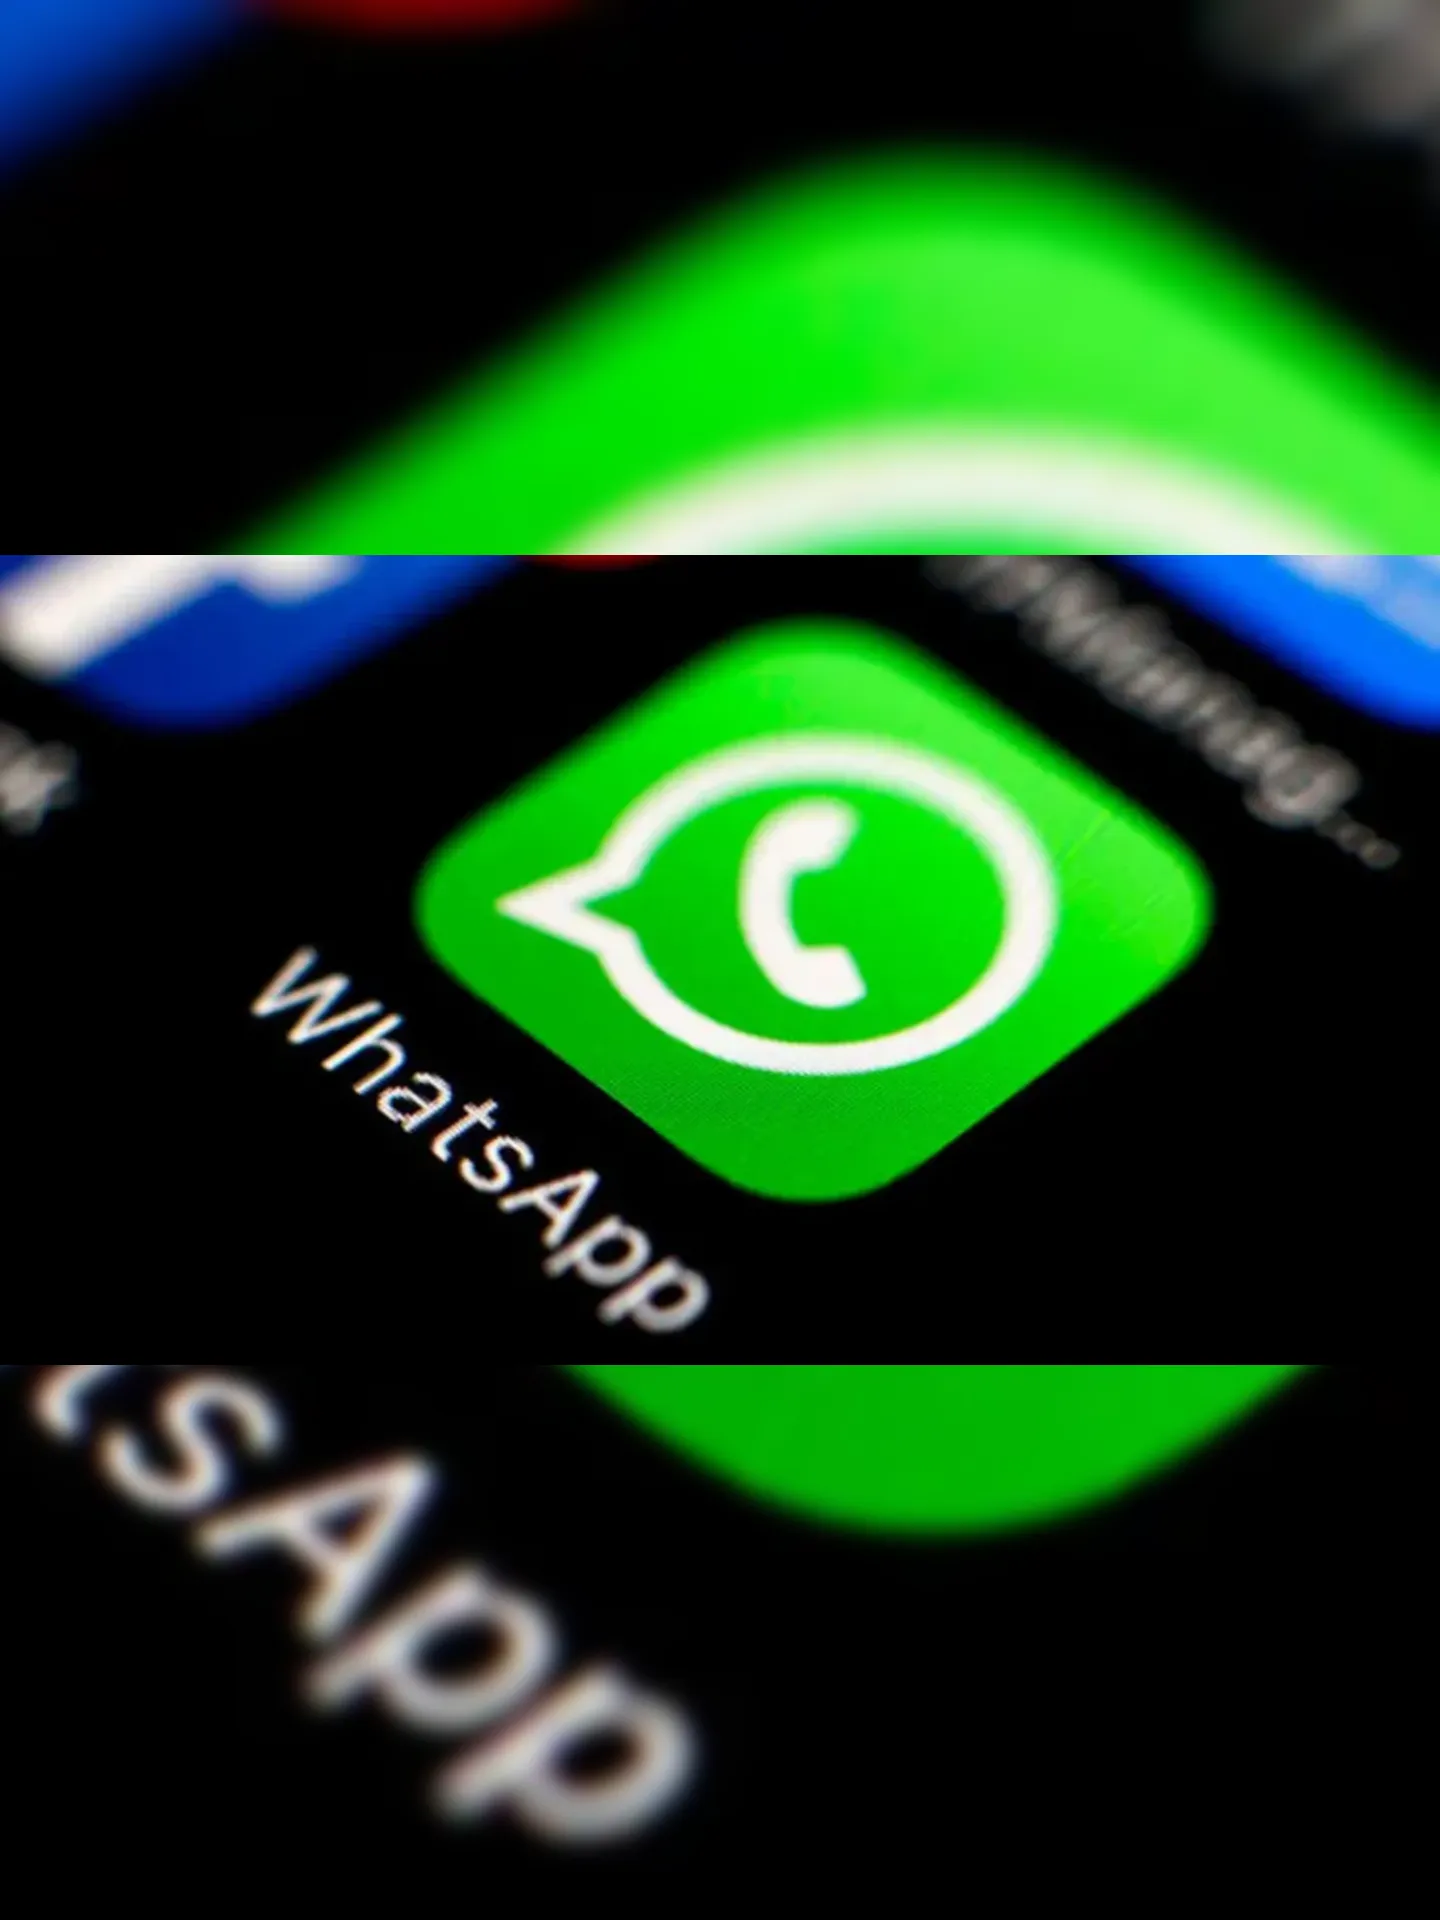 WhatsApp apresenta problemas nas mensagens